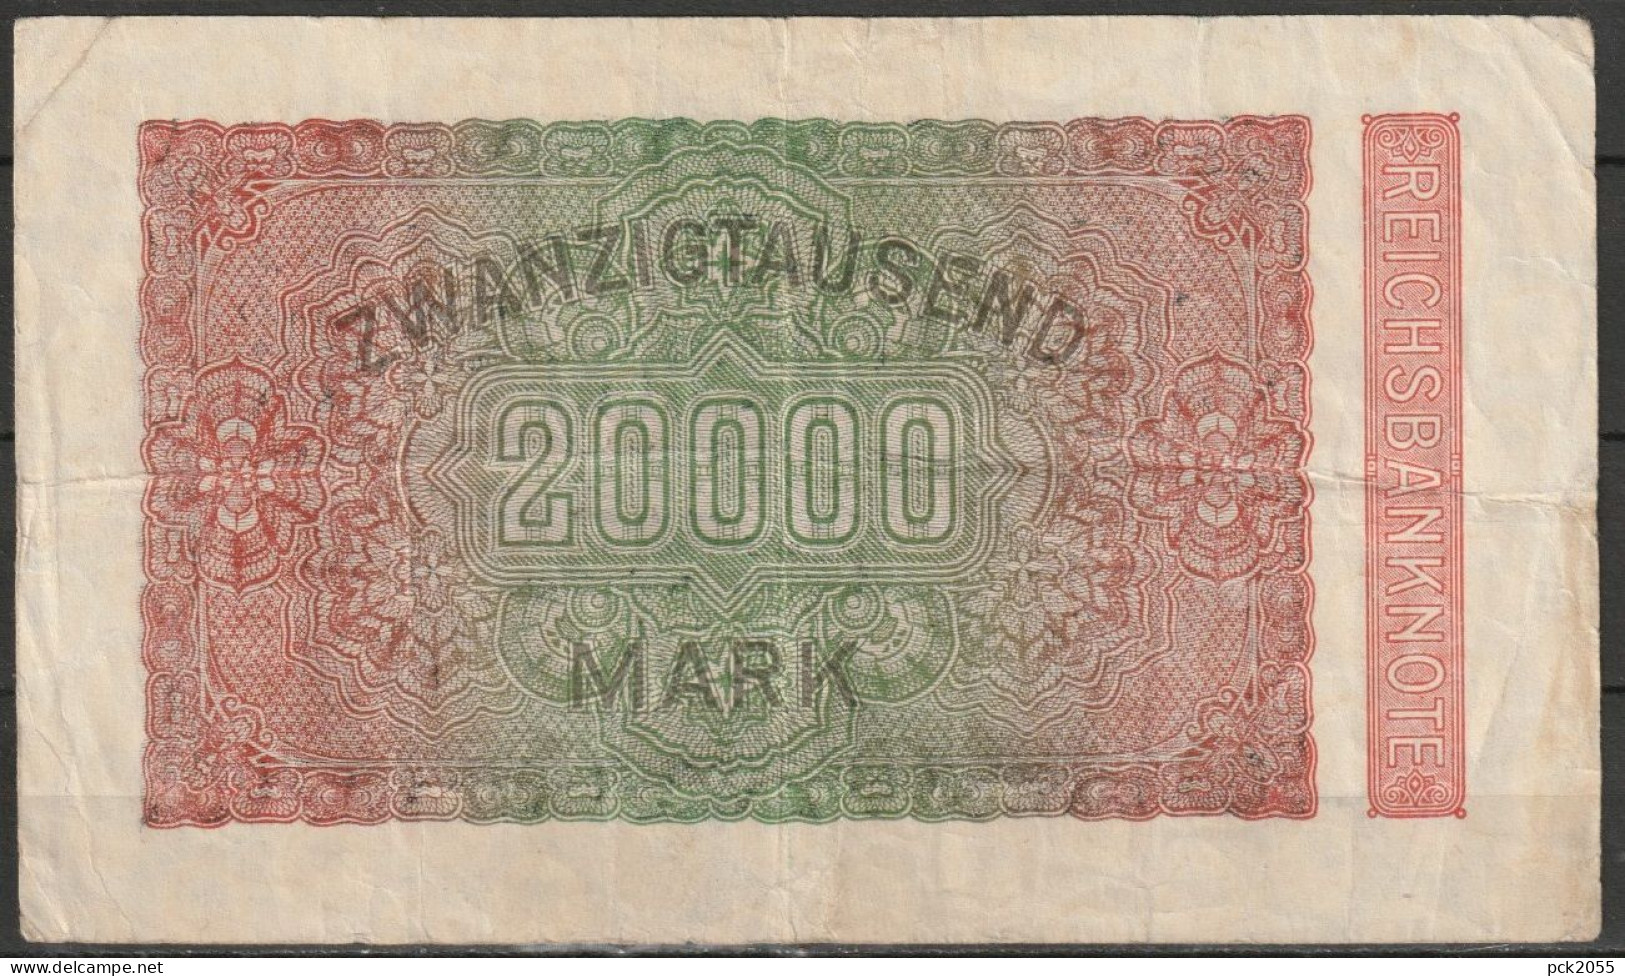 DR.20000 Mark Reichsbanknote 20.2.1923 Ros.Nr.84b, P85 ( D 6468 ) - 20000 Mark